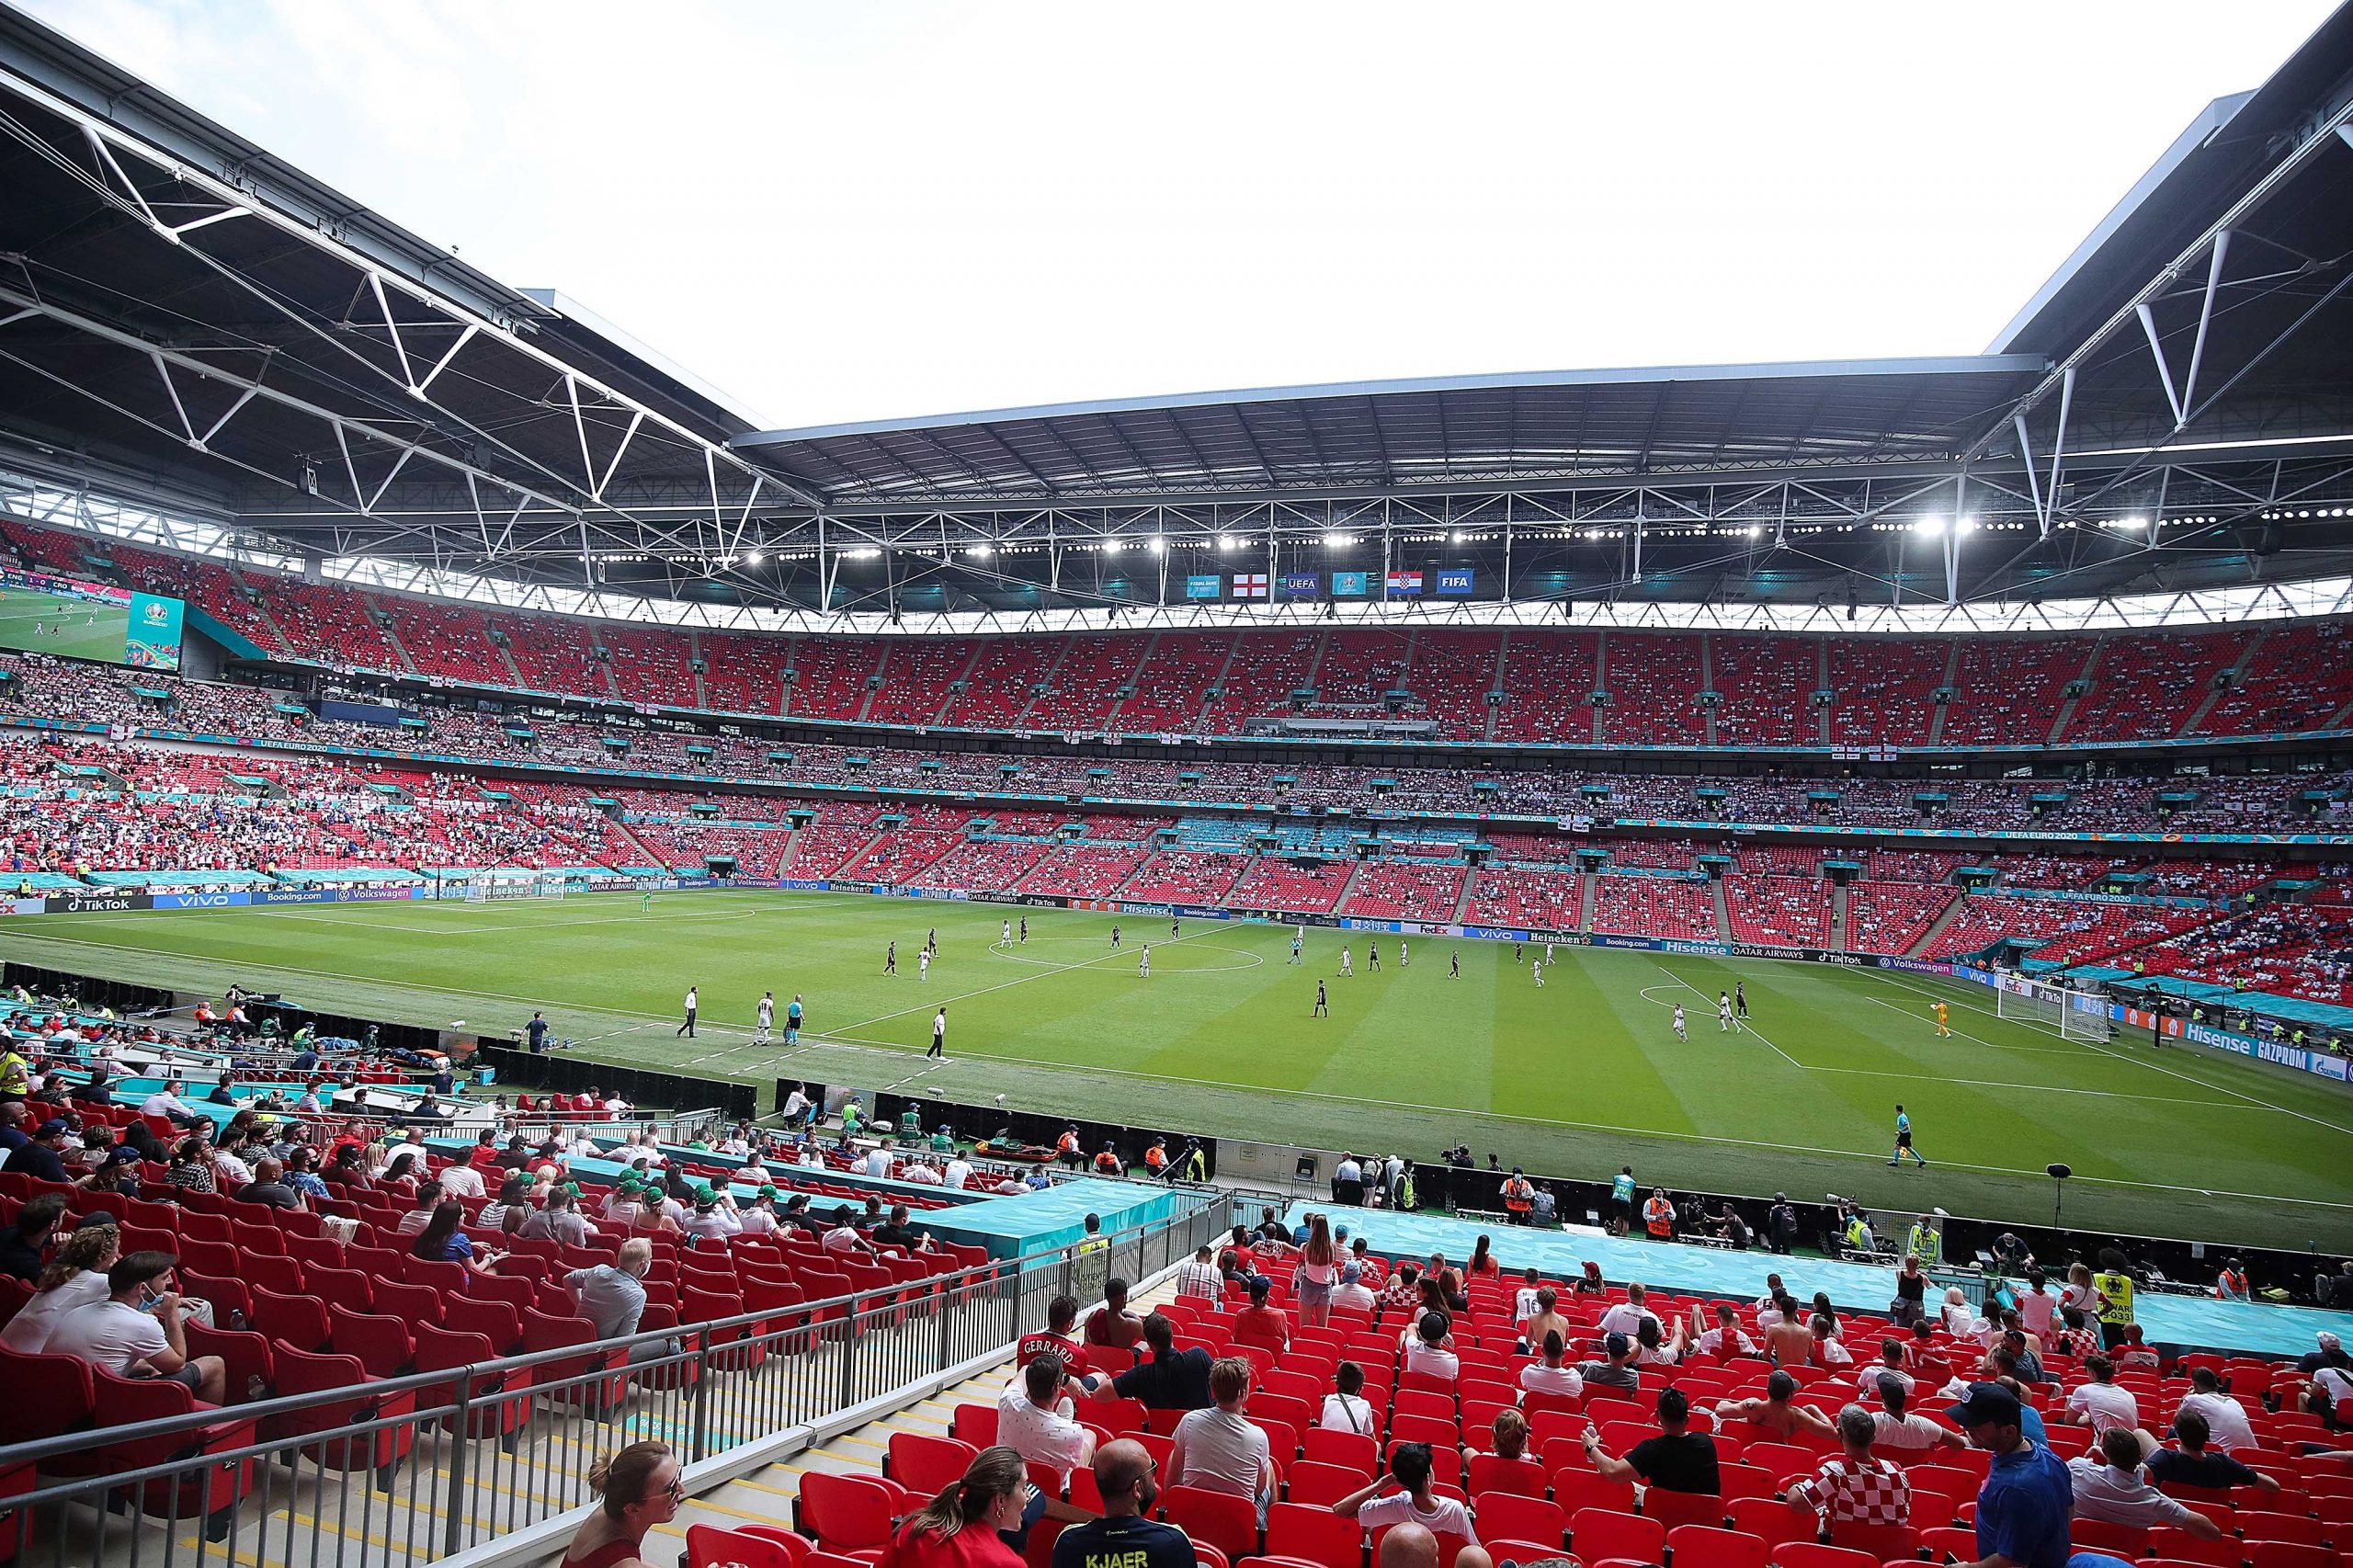 13.6.2021., Stadion Wembley, London, Engleska - UEFA Europsko prvenstvo 2020, skupina D, 1. kolo, Engleska - Hrvatska. 
Photo: Goran Stanzl/PIXSELL